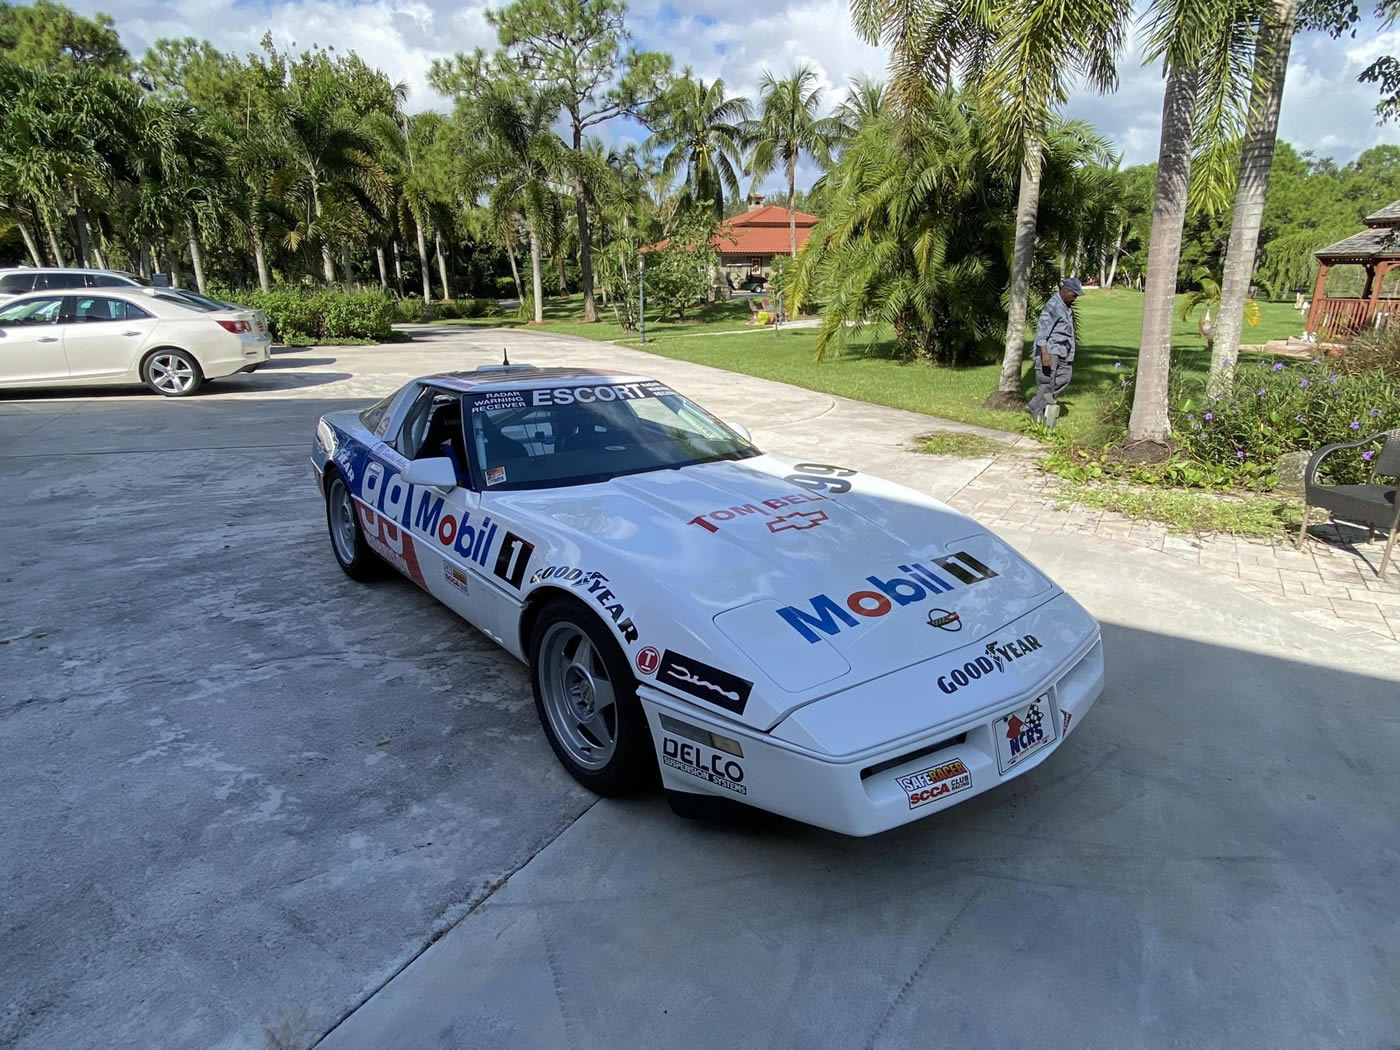 1990-corvette-scca-escort-world-challenge-race-car-13.jpg